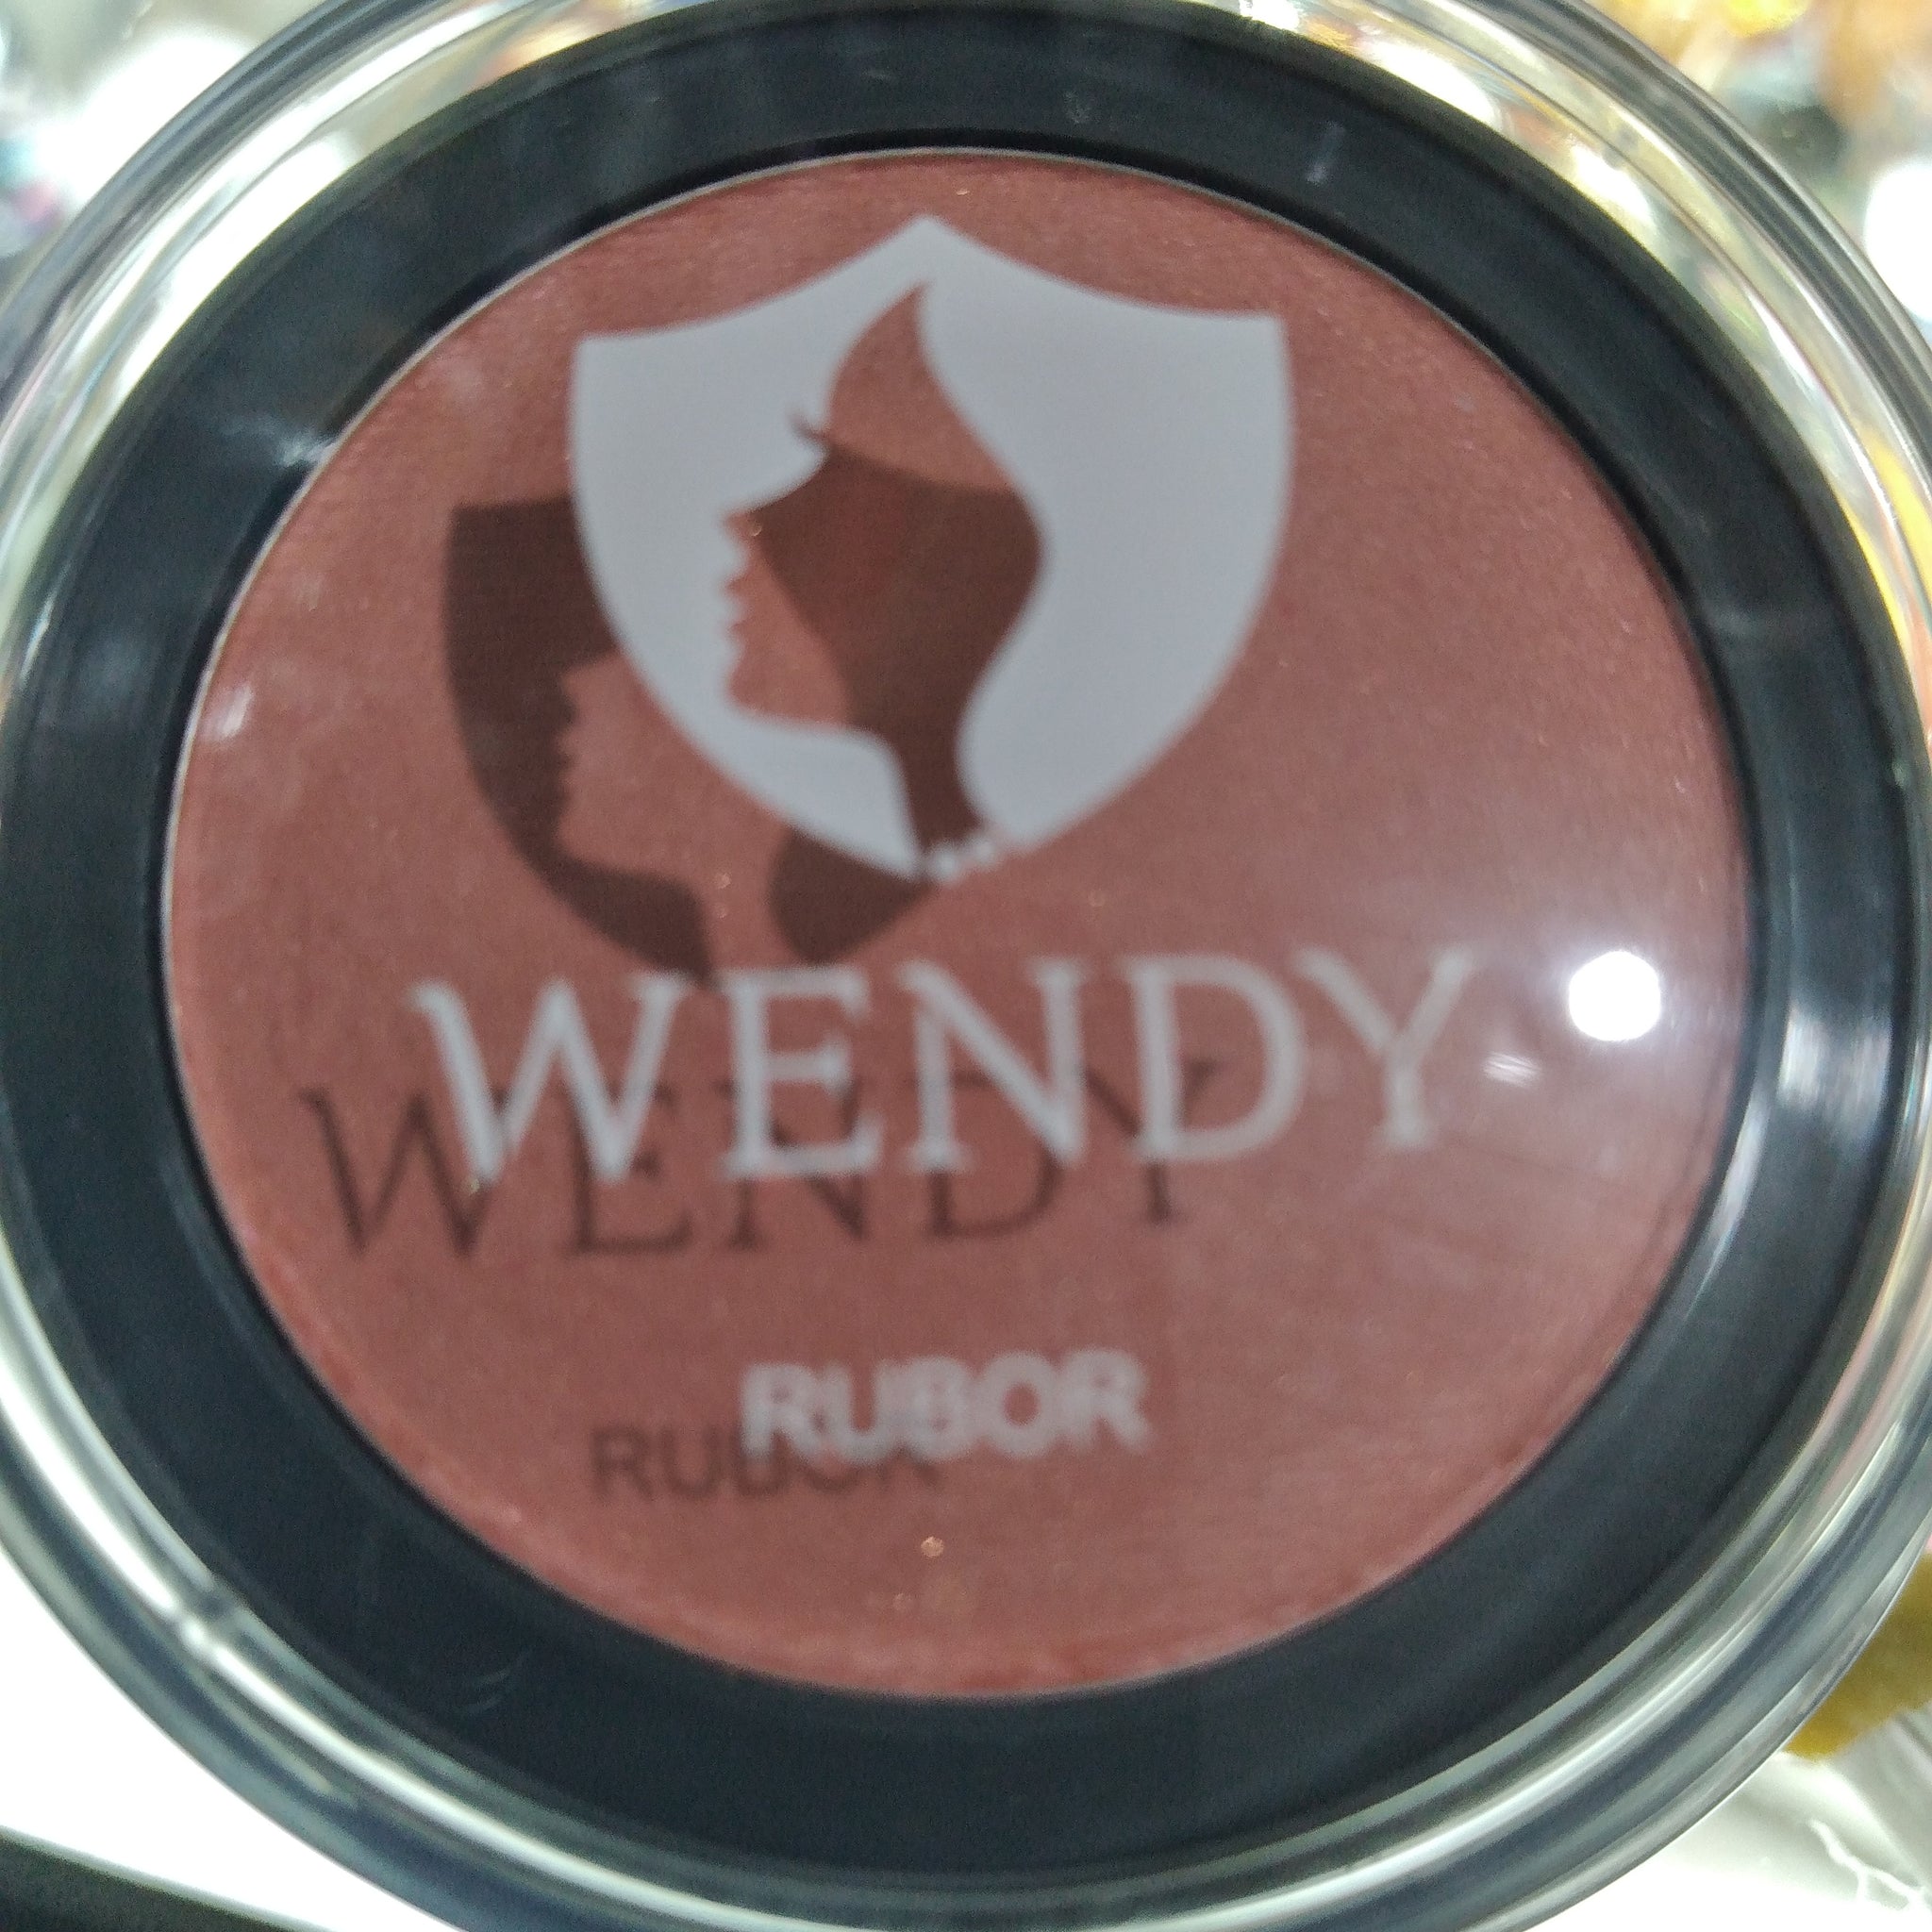 Rubor wendy 06